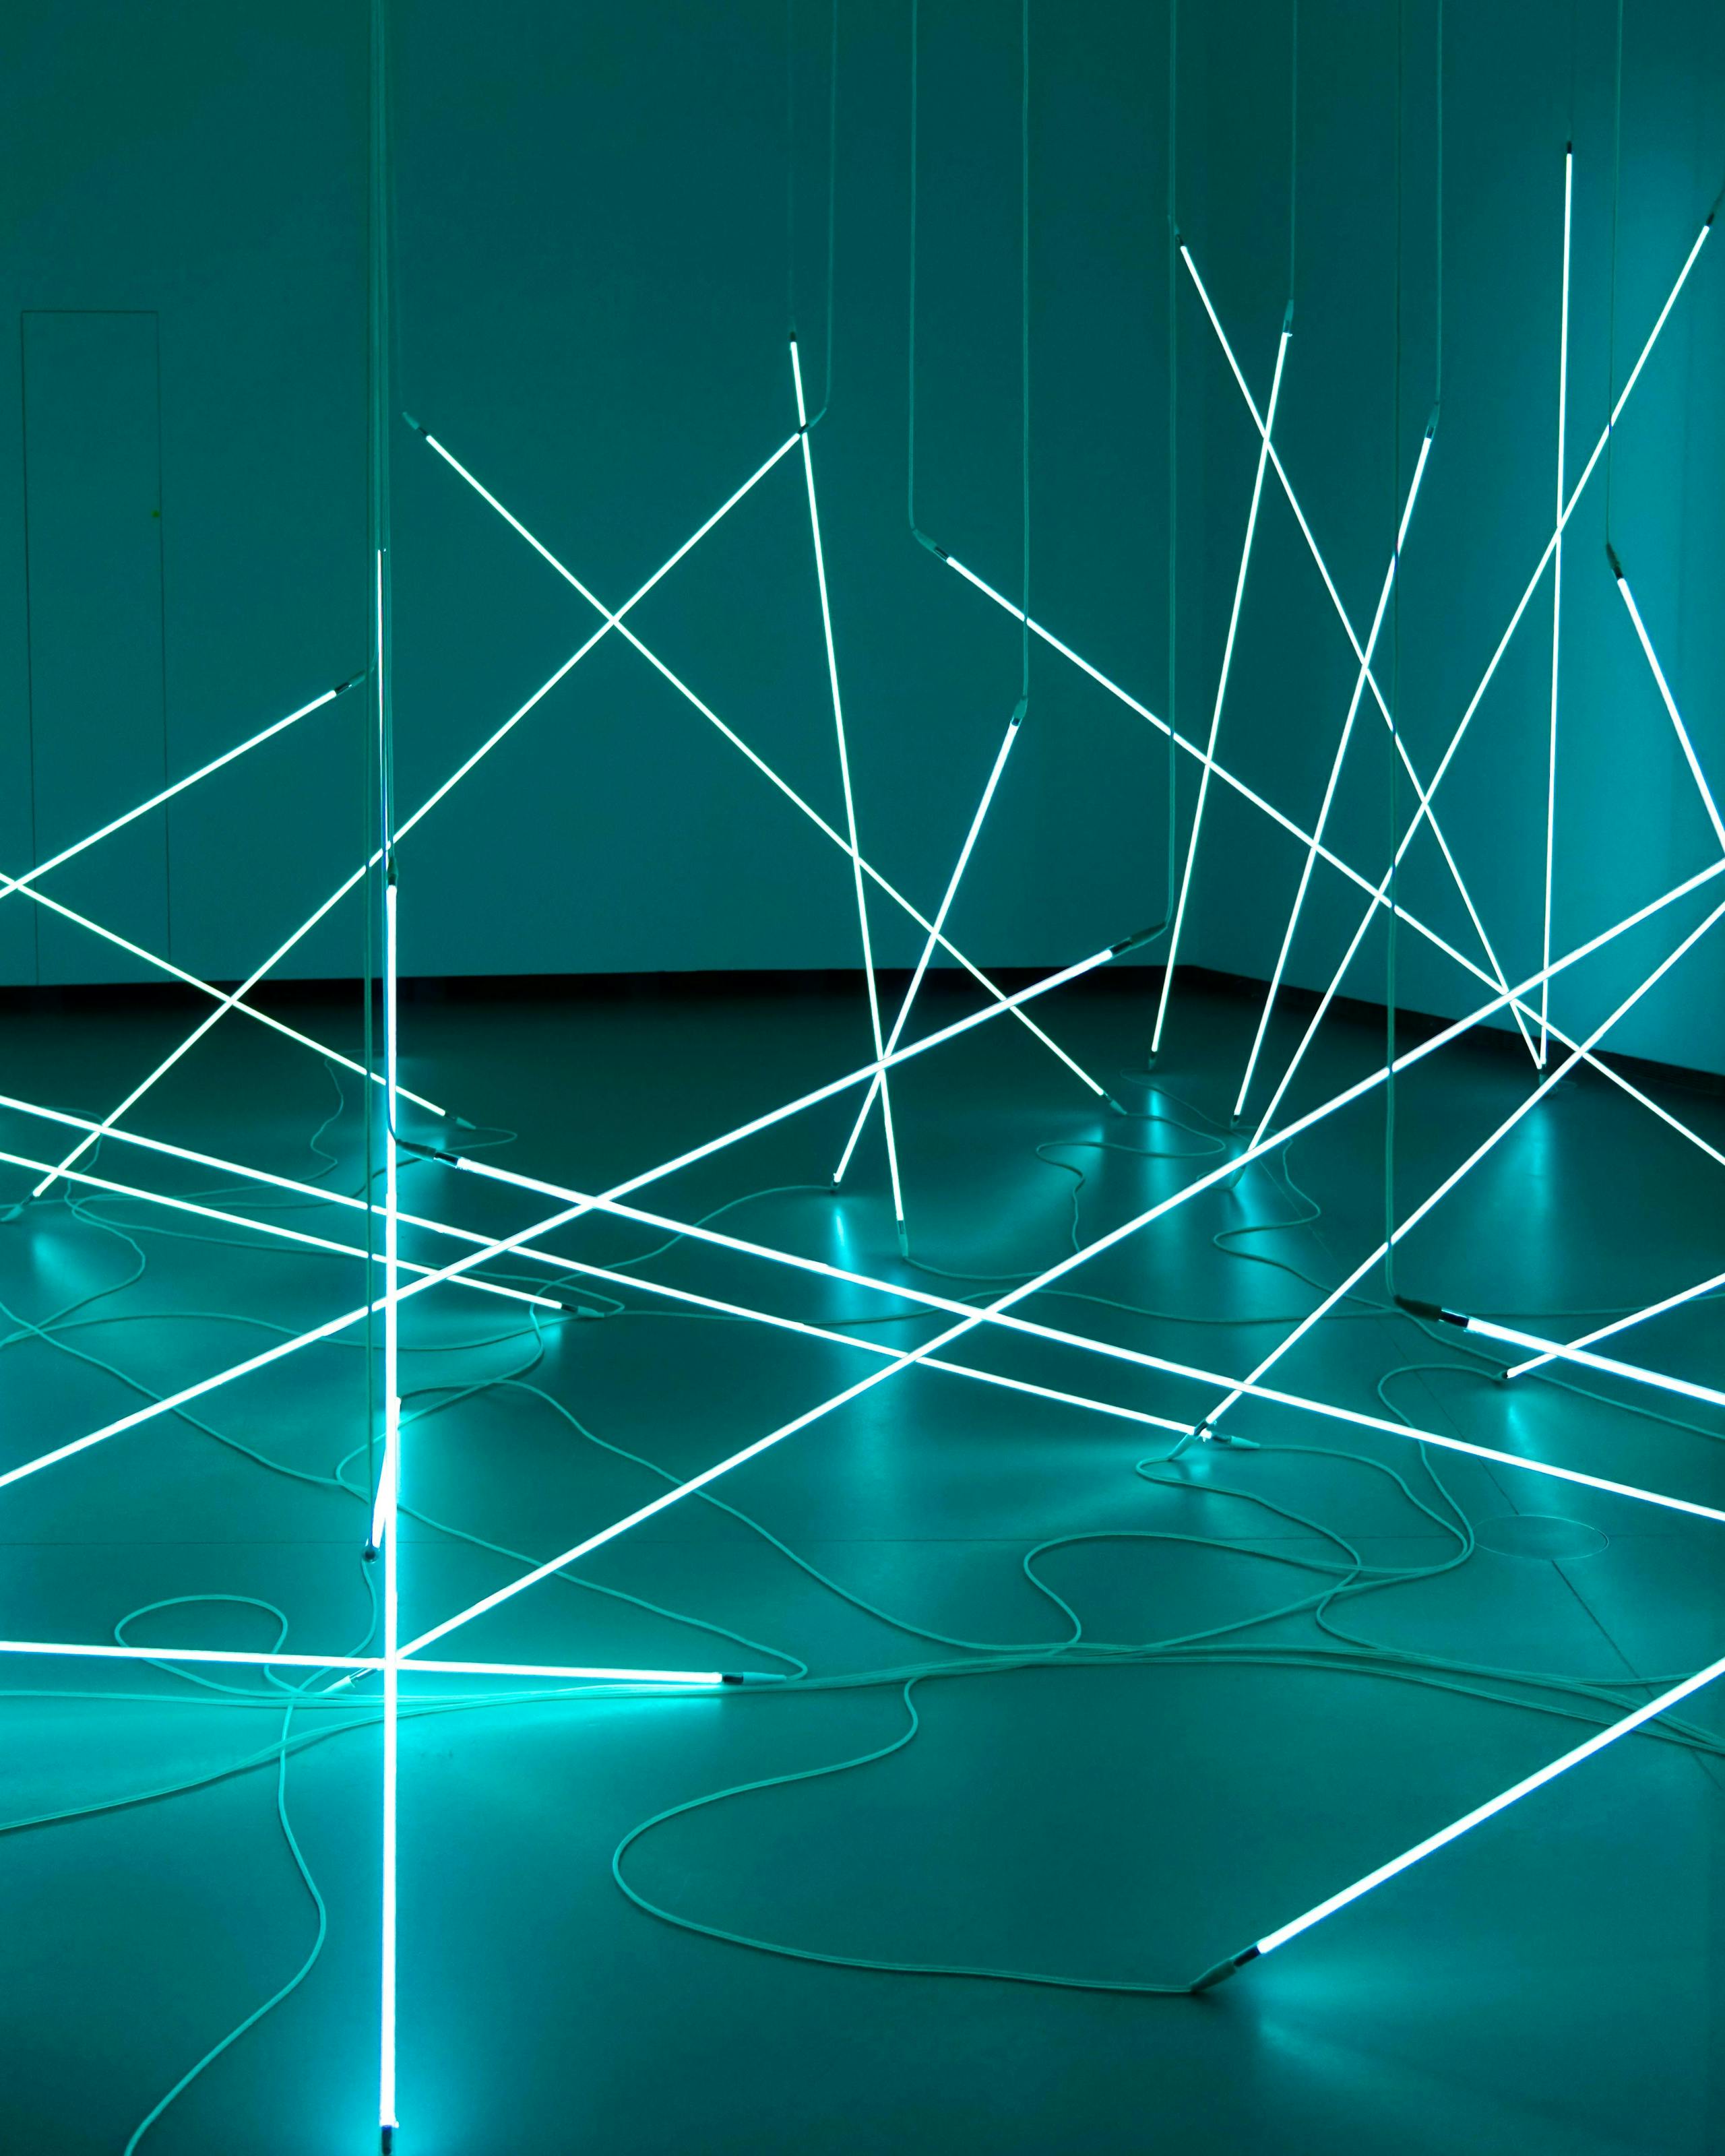 Neon lights in an art installation